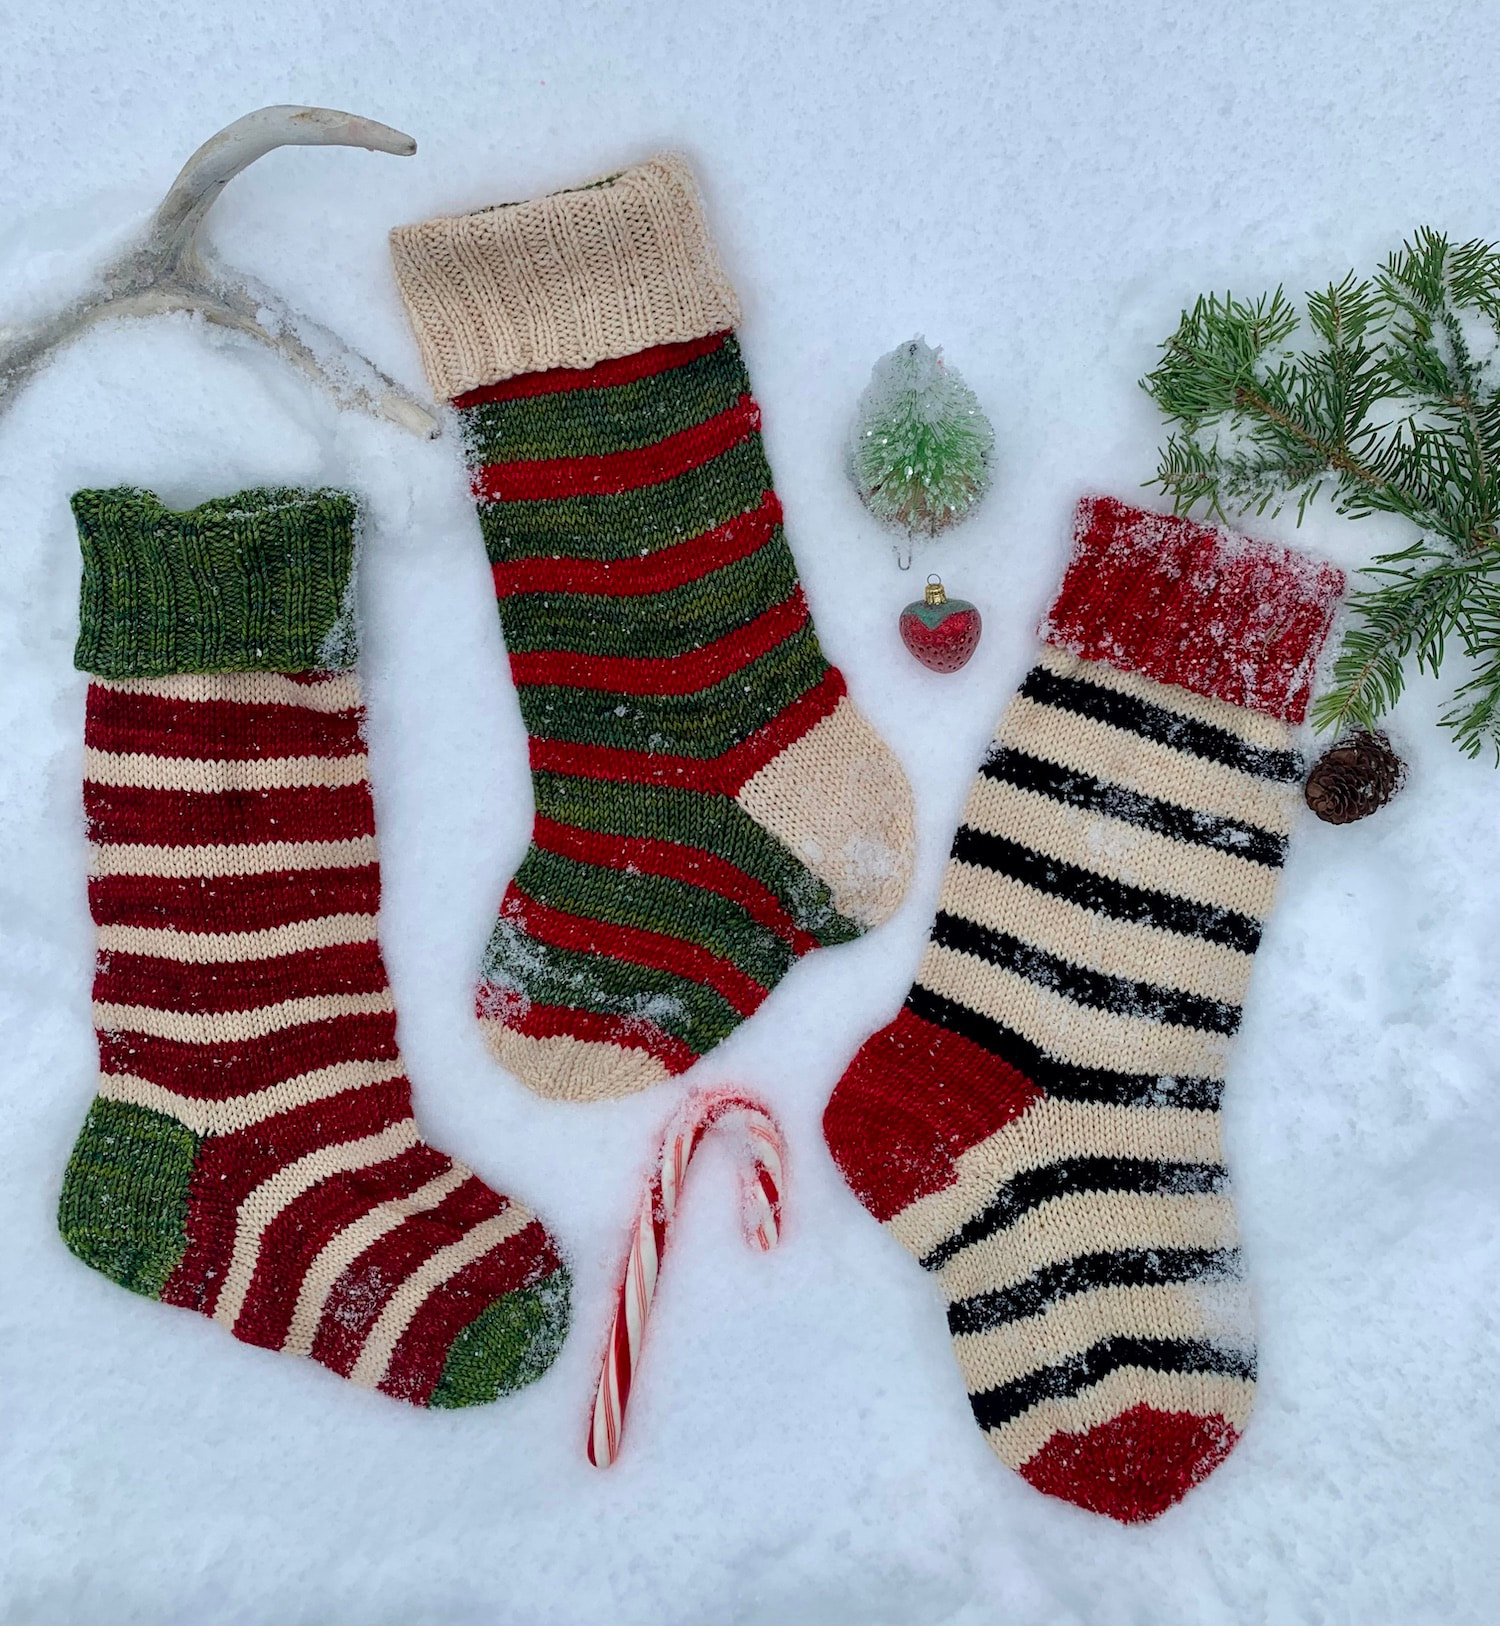 Easy to Knit Cheery Striped Christmas Stockings - Use Malabrigo